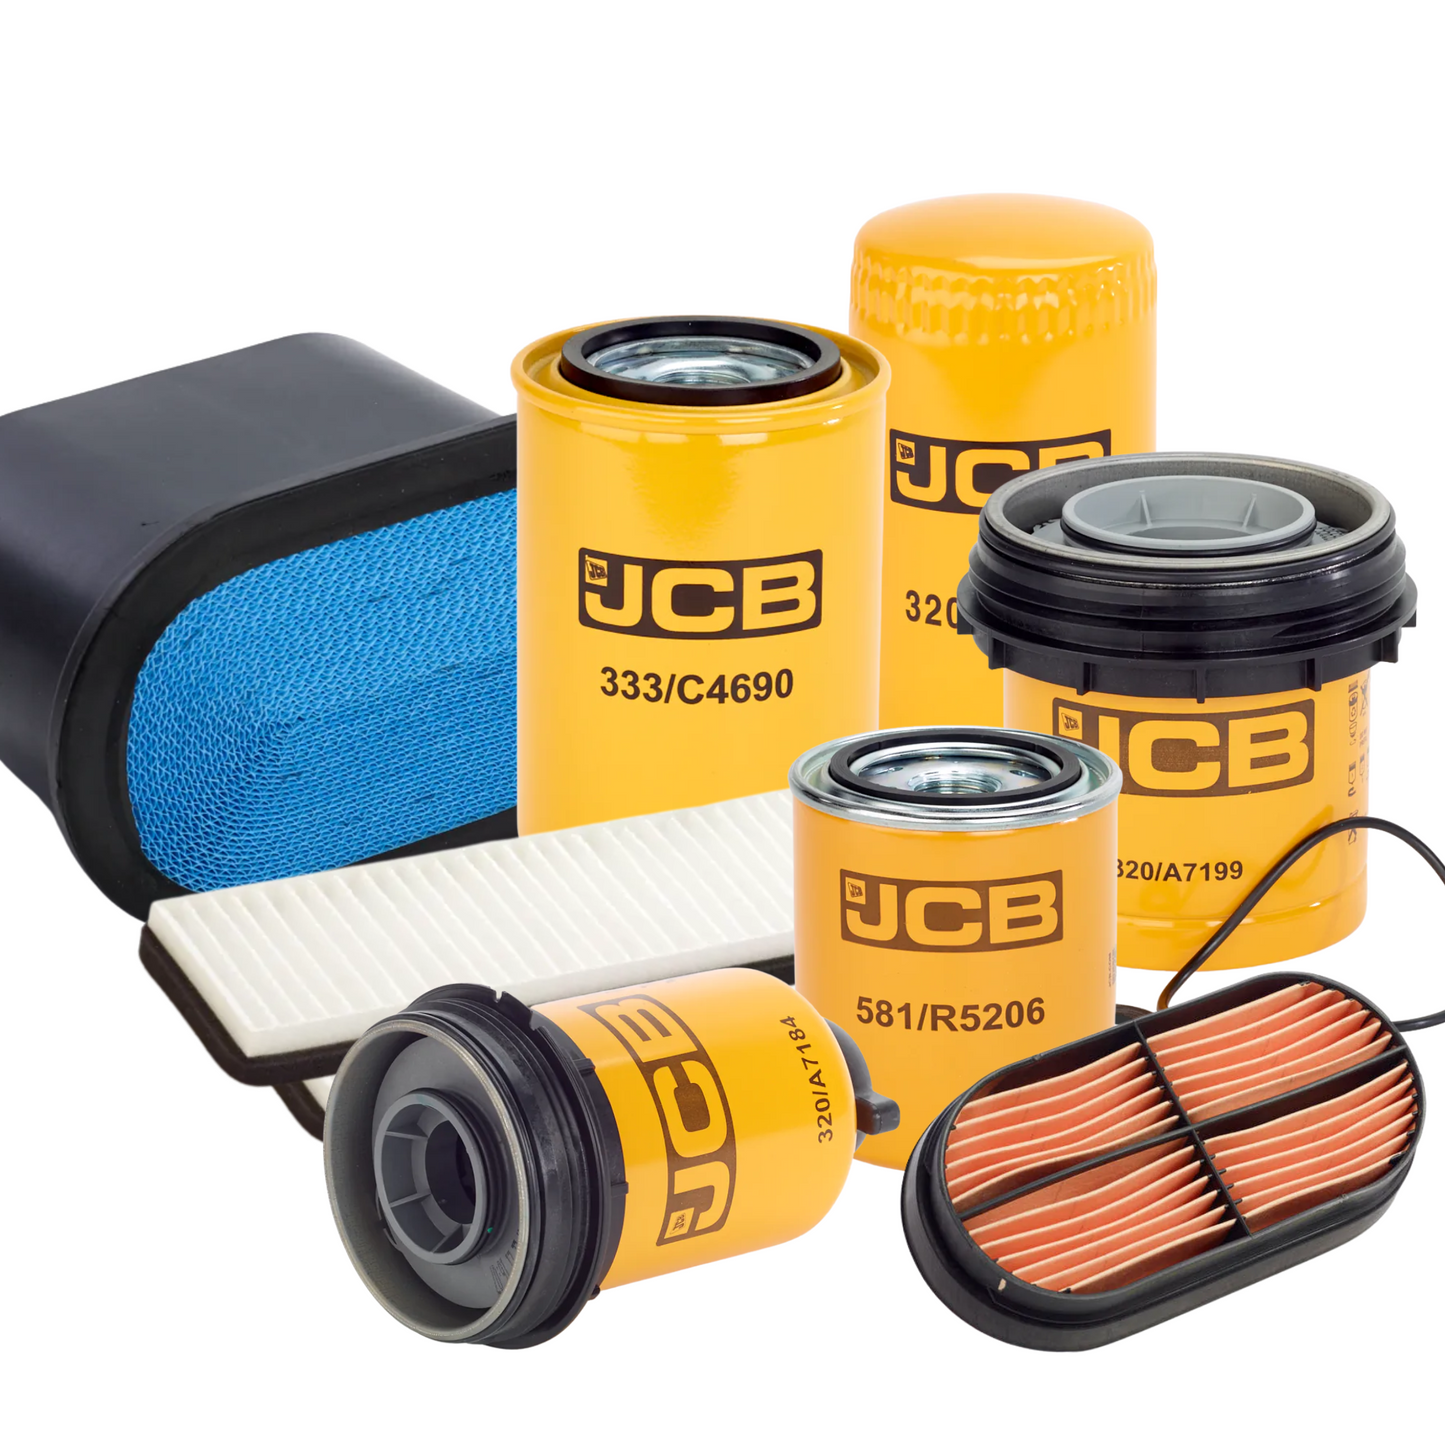 JCB 535-125 2000 Hour Filter Service Kit